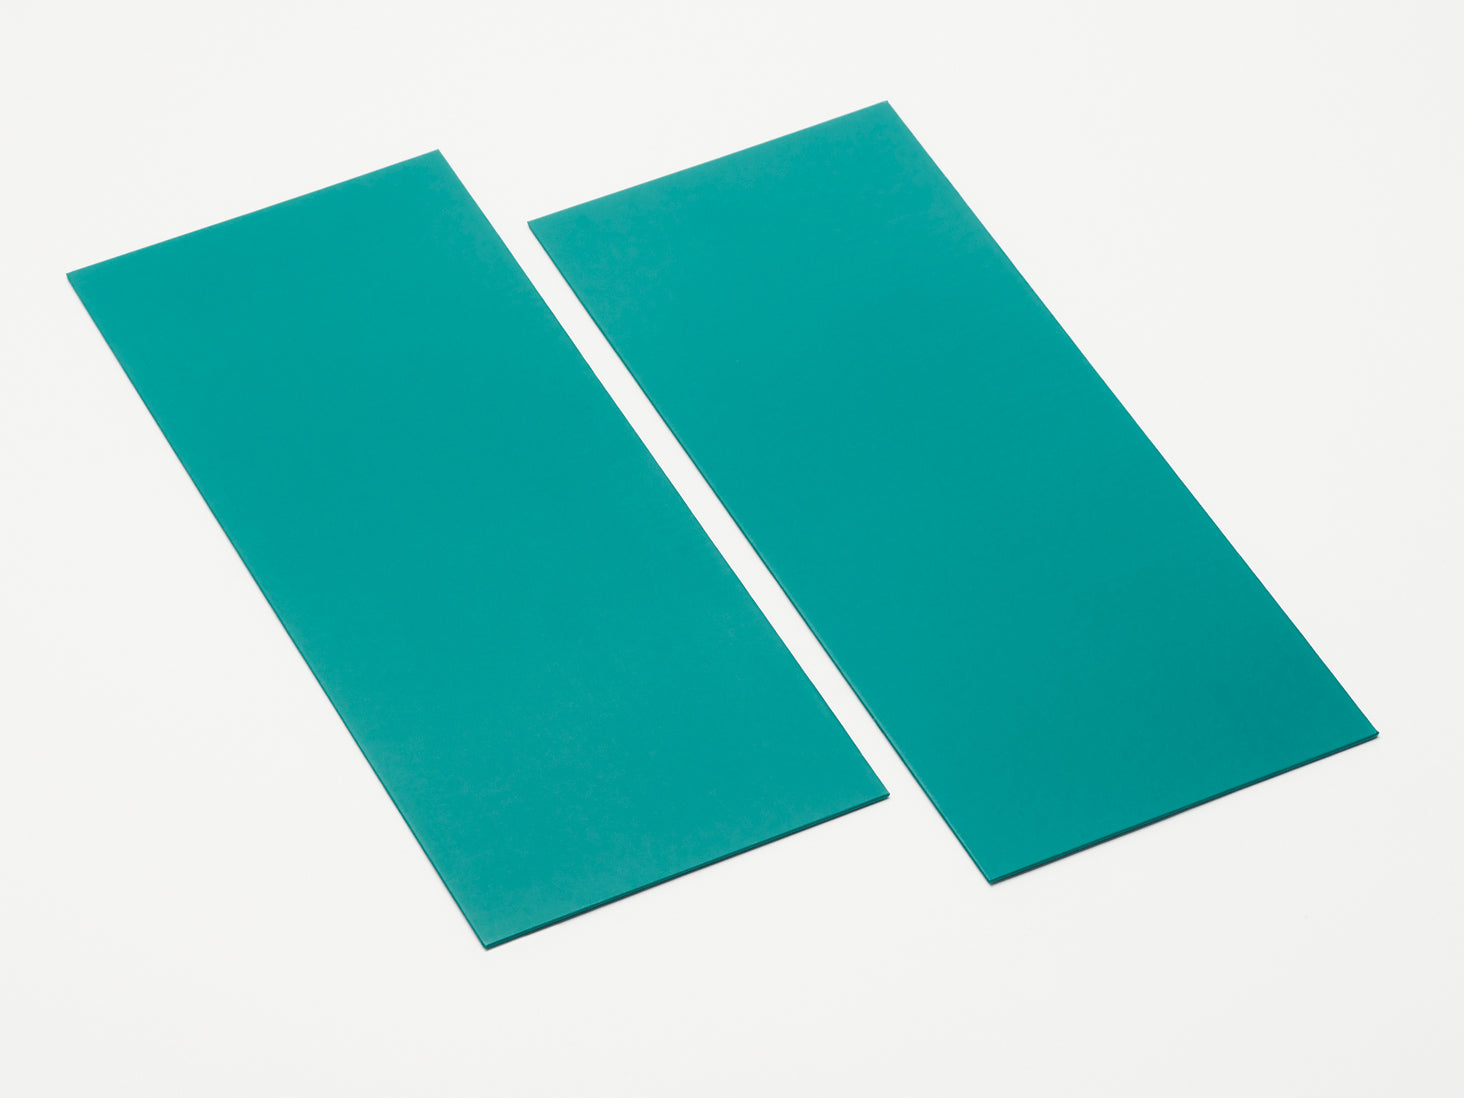 Sample Jade Green FAB Sides® Decorative Side Panels XL Deep